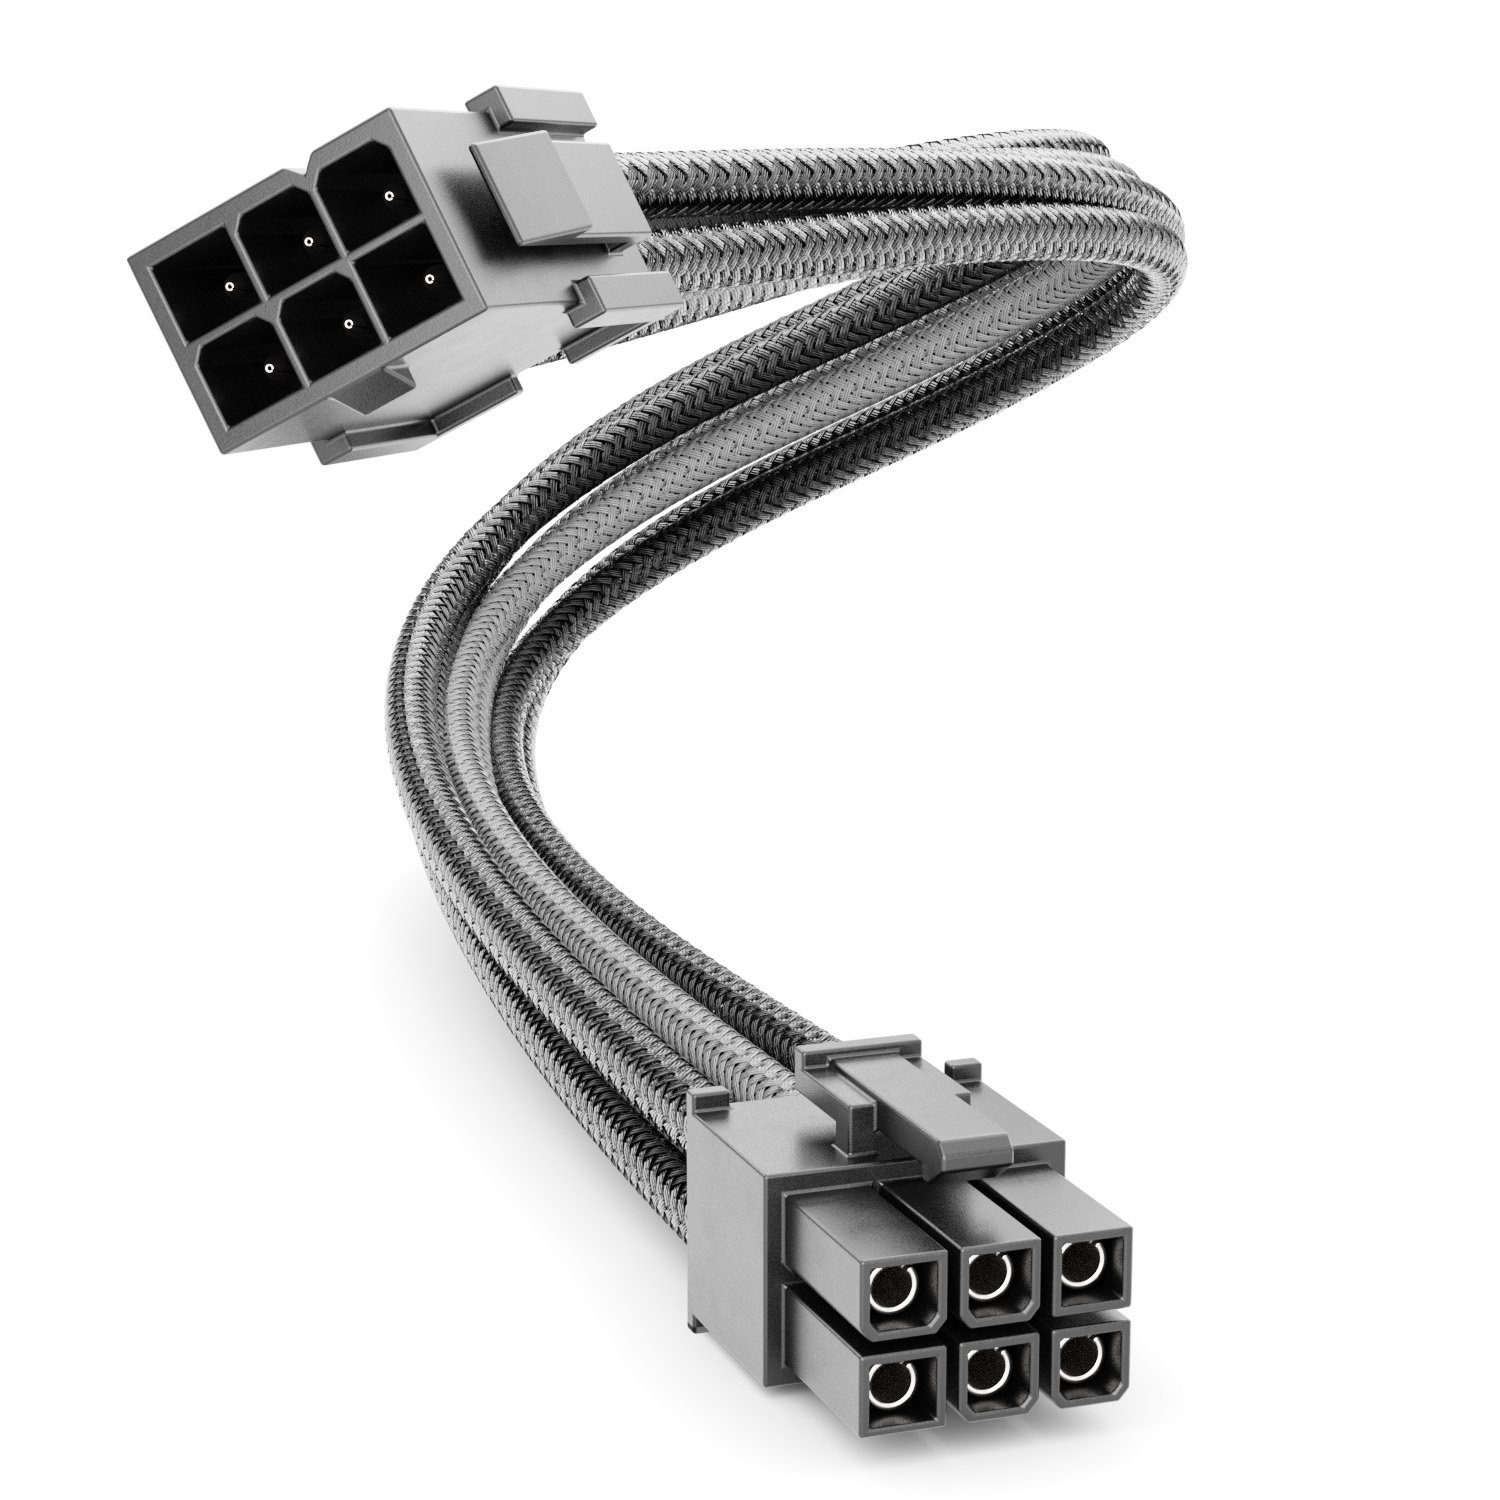 deleyCON deleyCON 6 Pin PCI Express GPU Grafikkarte Strom Kabel